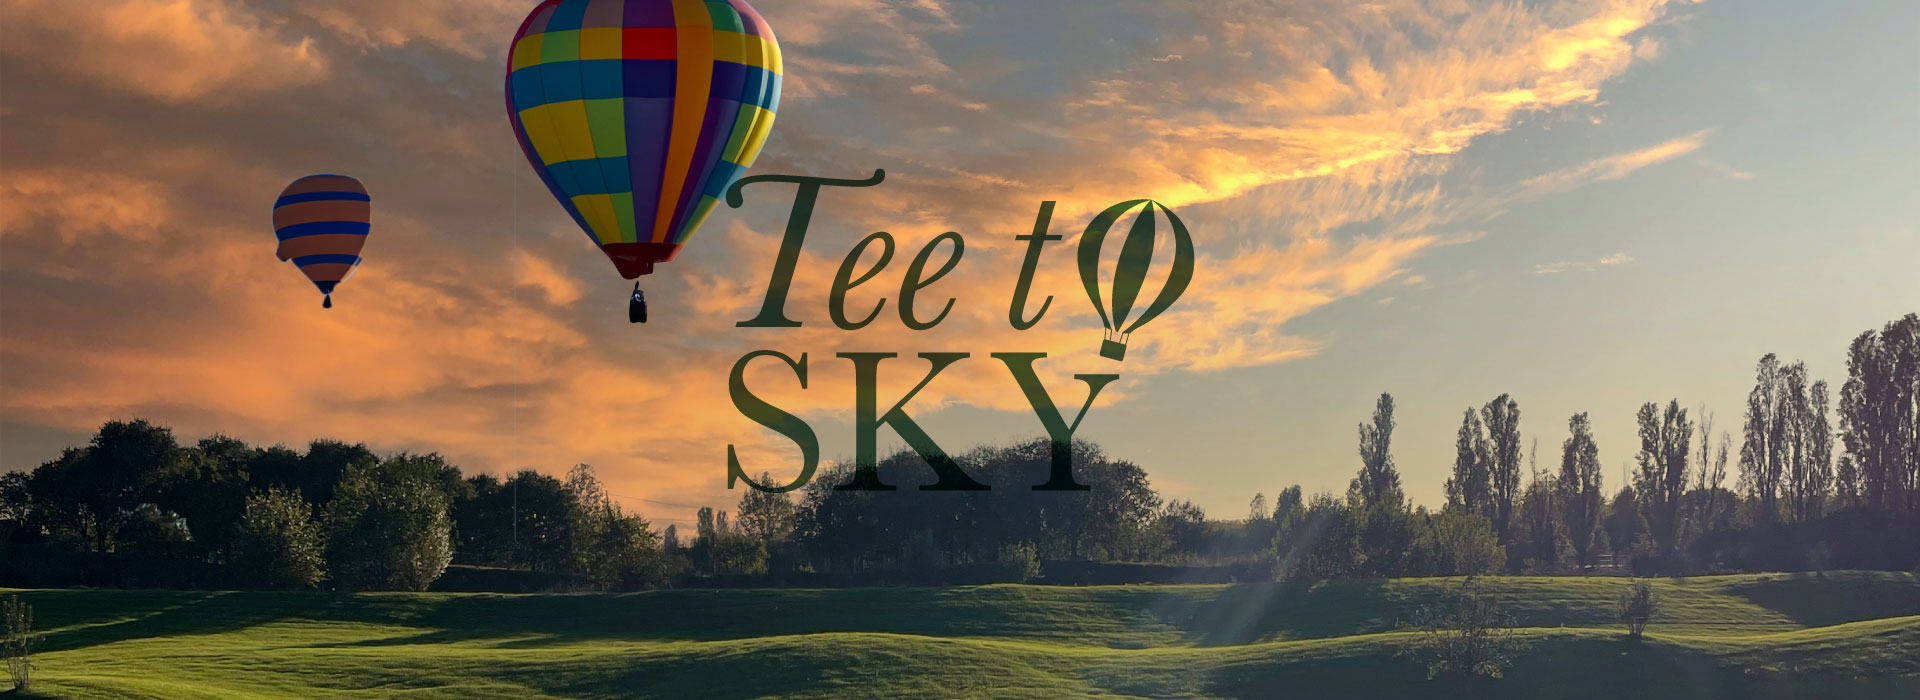 TEE TO SKY – Un evento unico